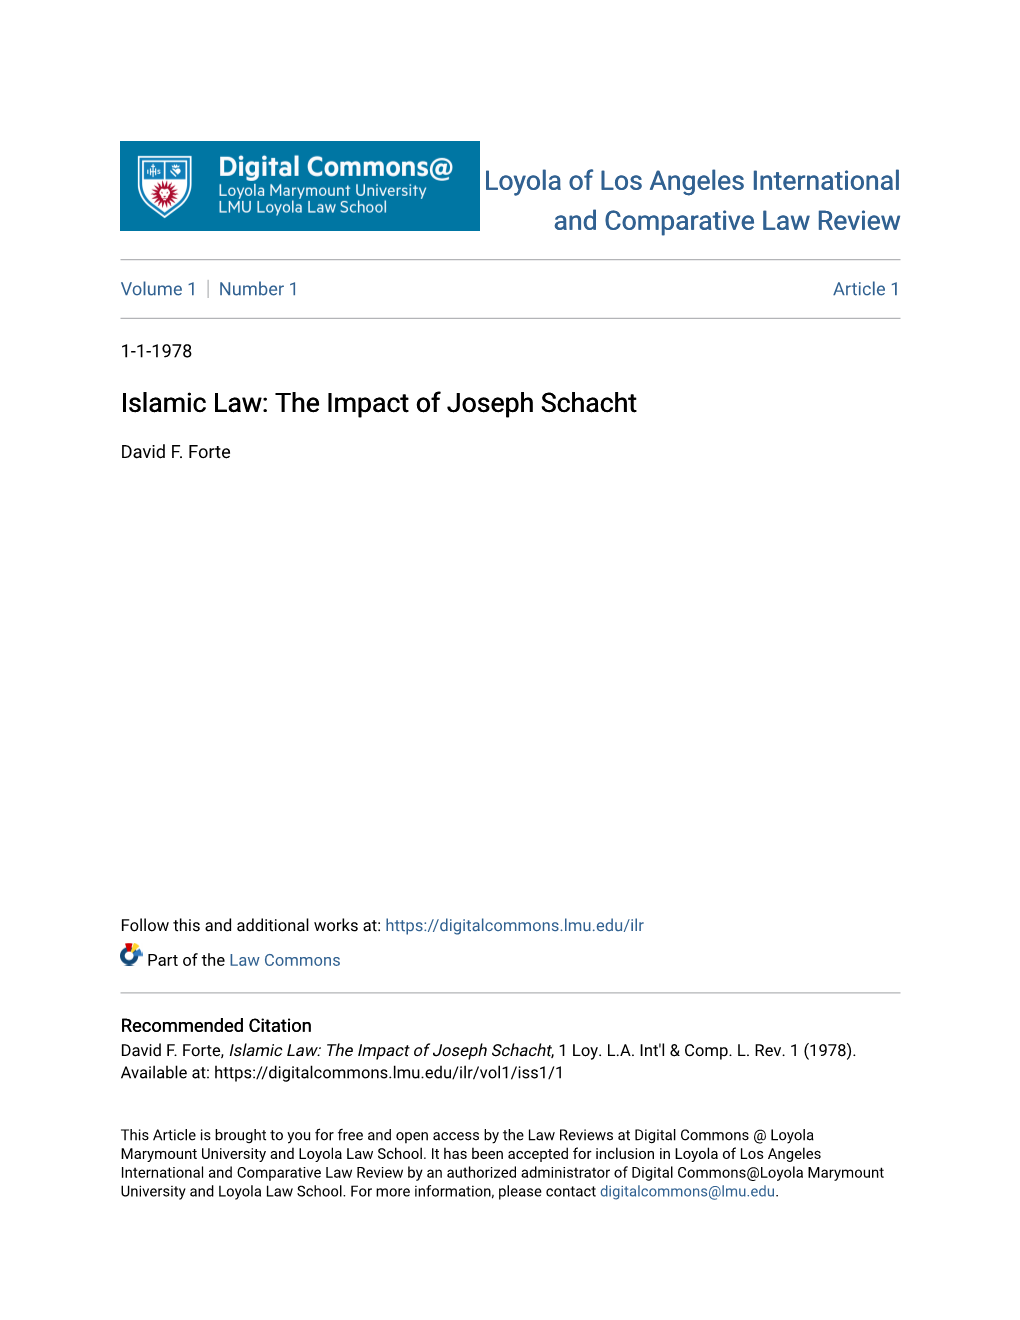 Islamic Law: the Impact of Joseph Schacht